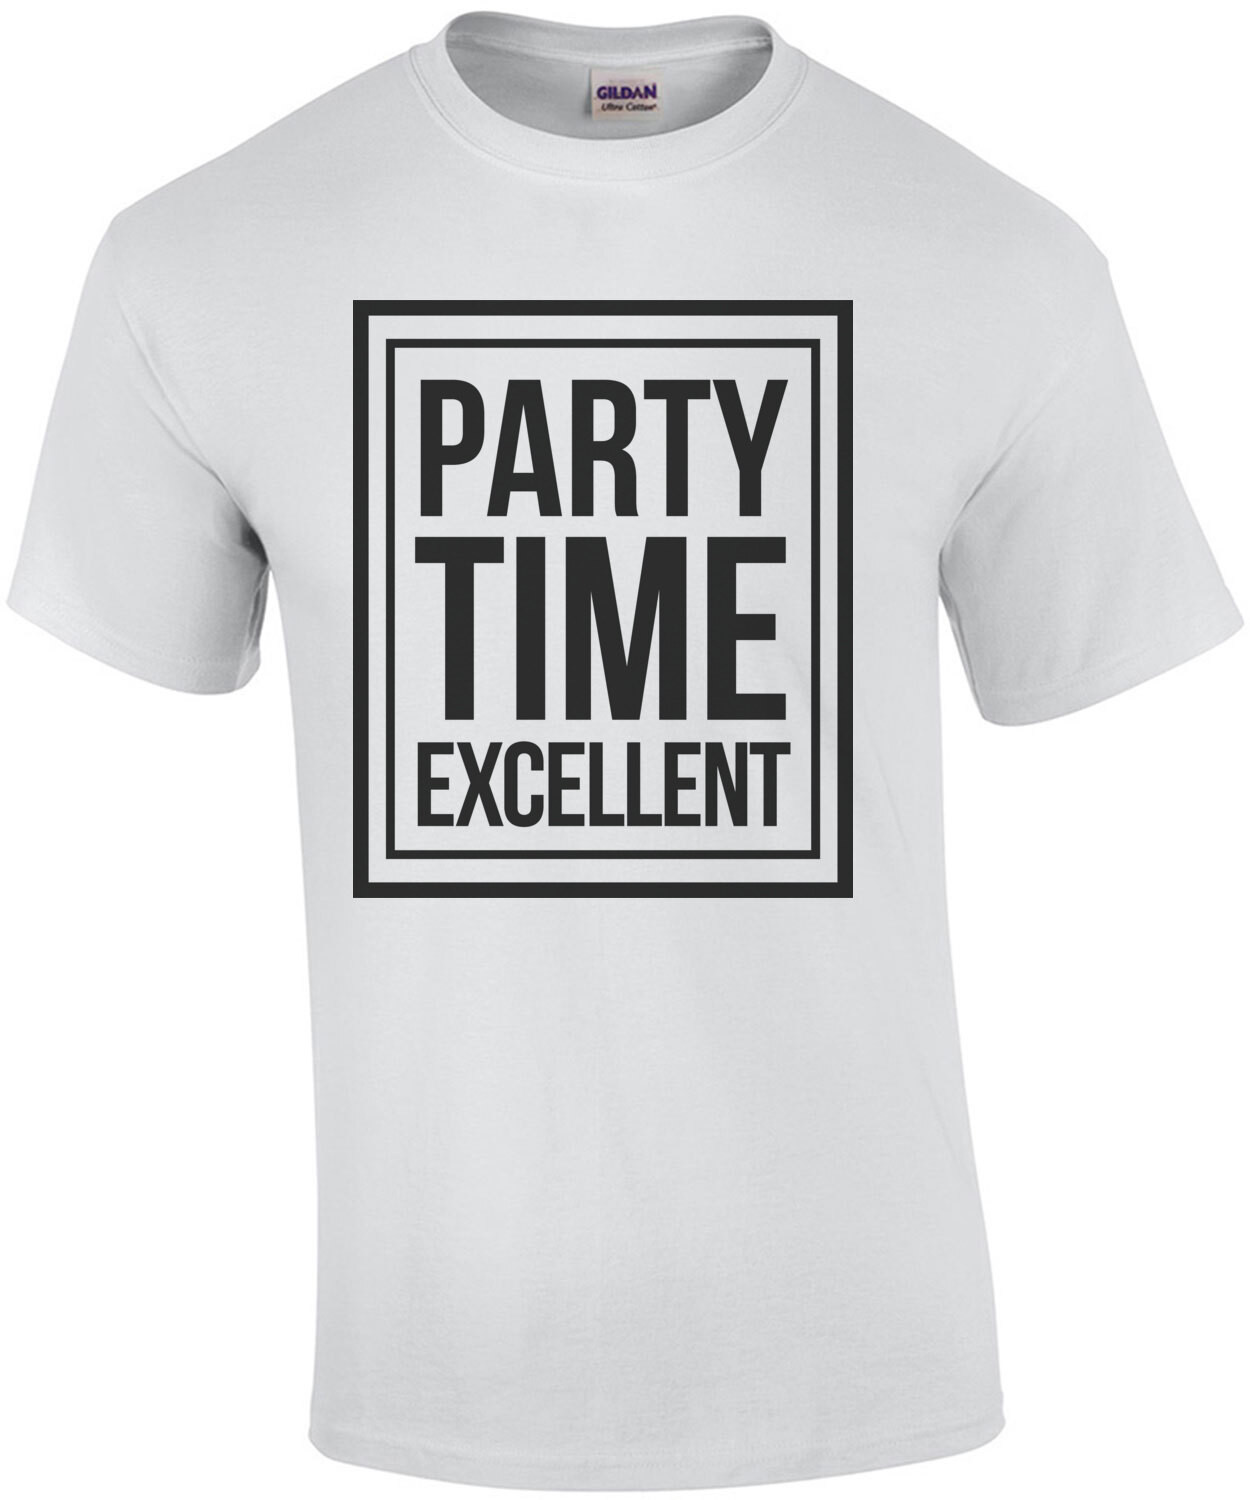 Party Time Excellent - Wayne's World - 90's T-Shirt